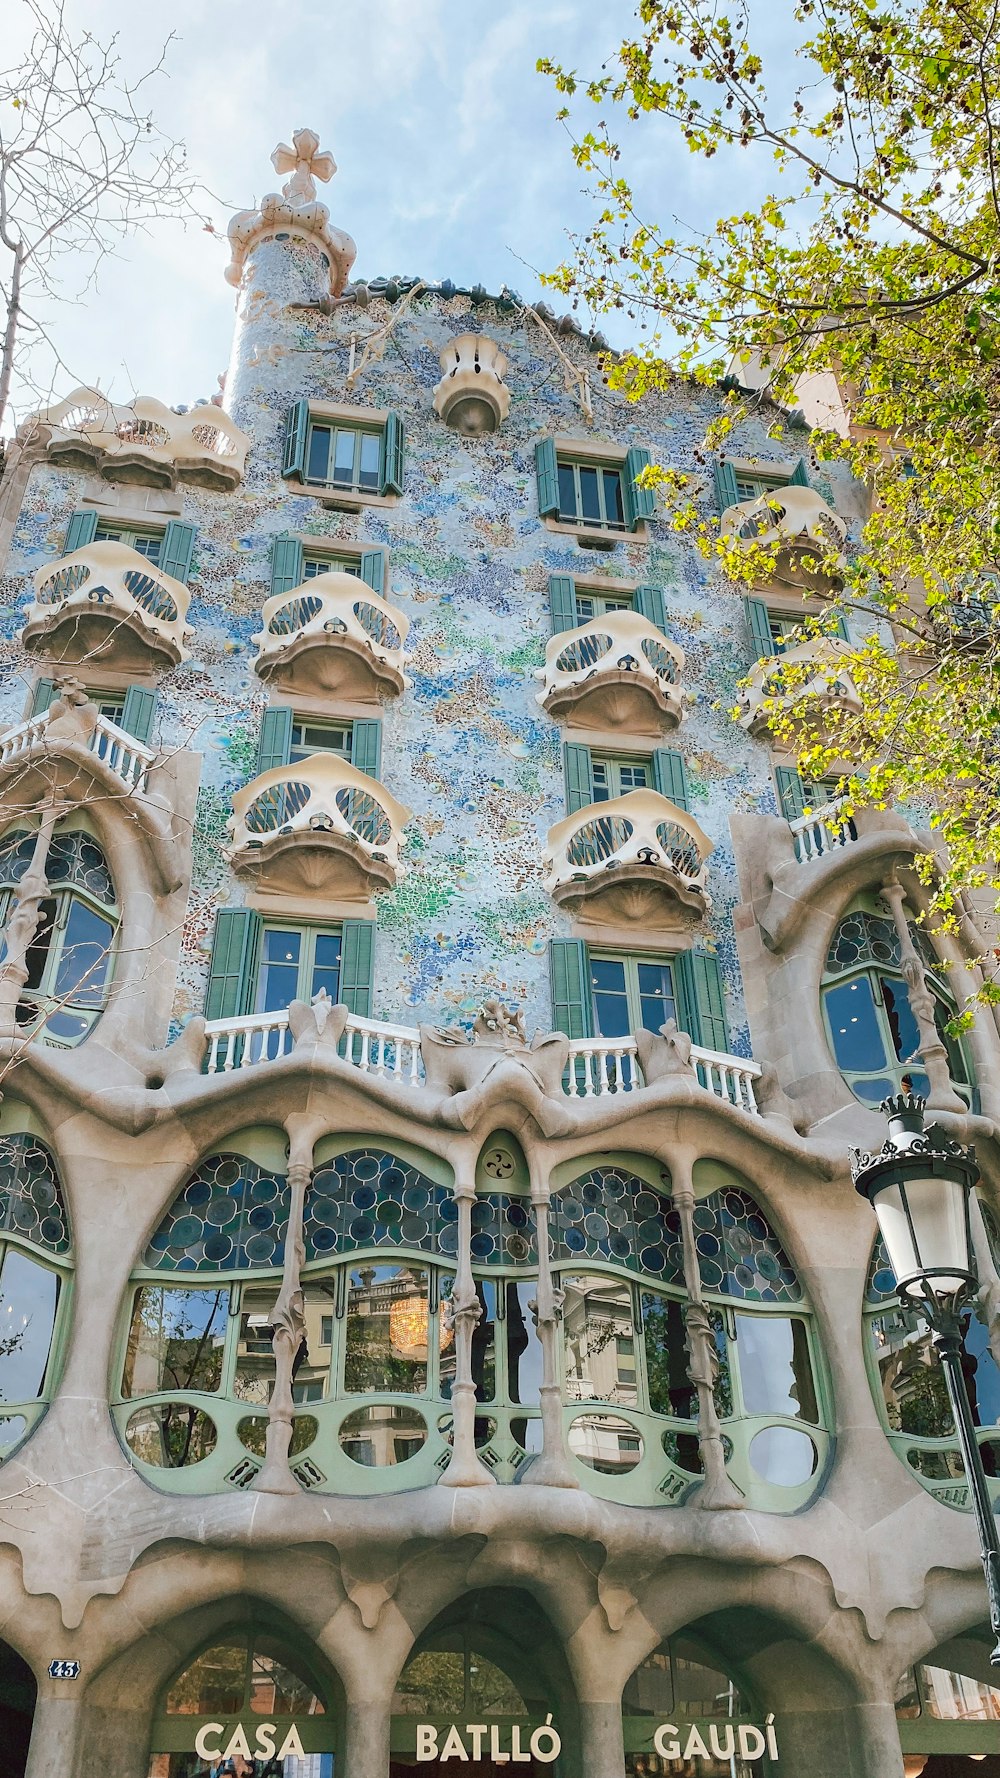 Casa Batlló con molte finestre